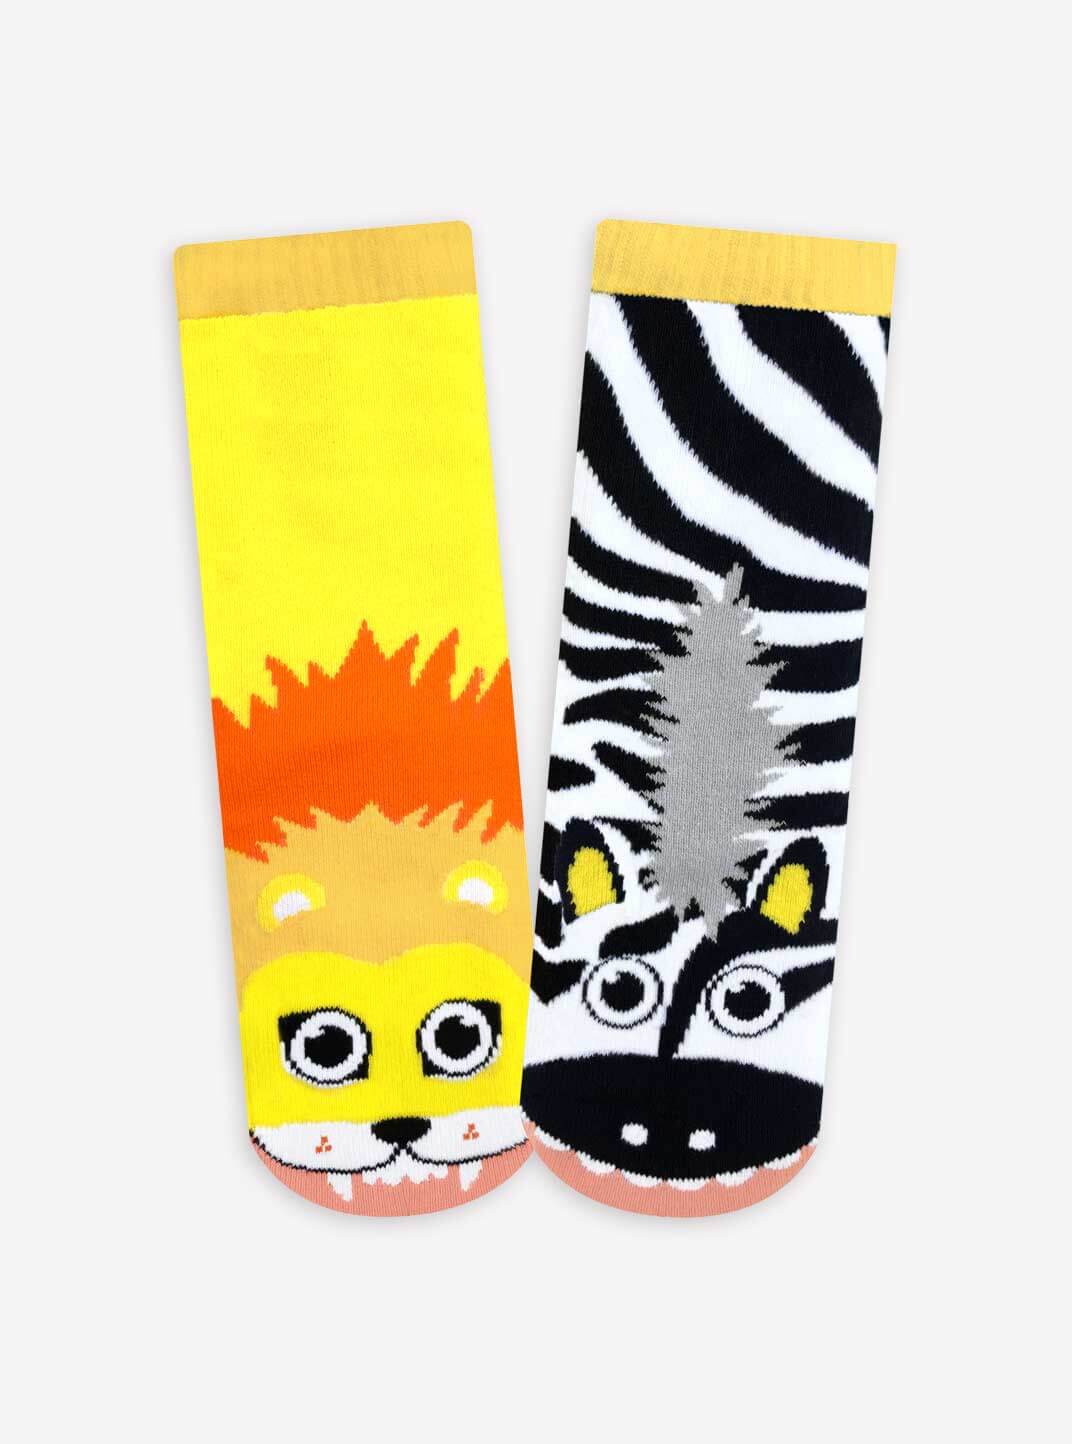 Pals Socks - Lion & Zebra Mismatched Kids Socks